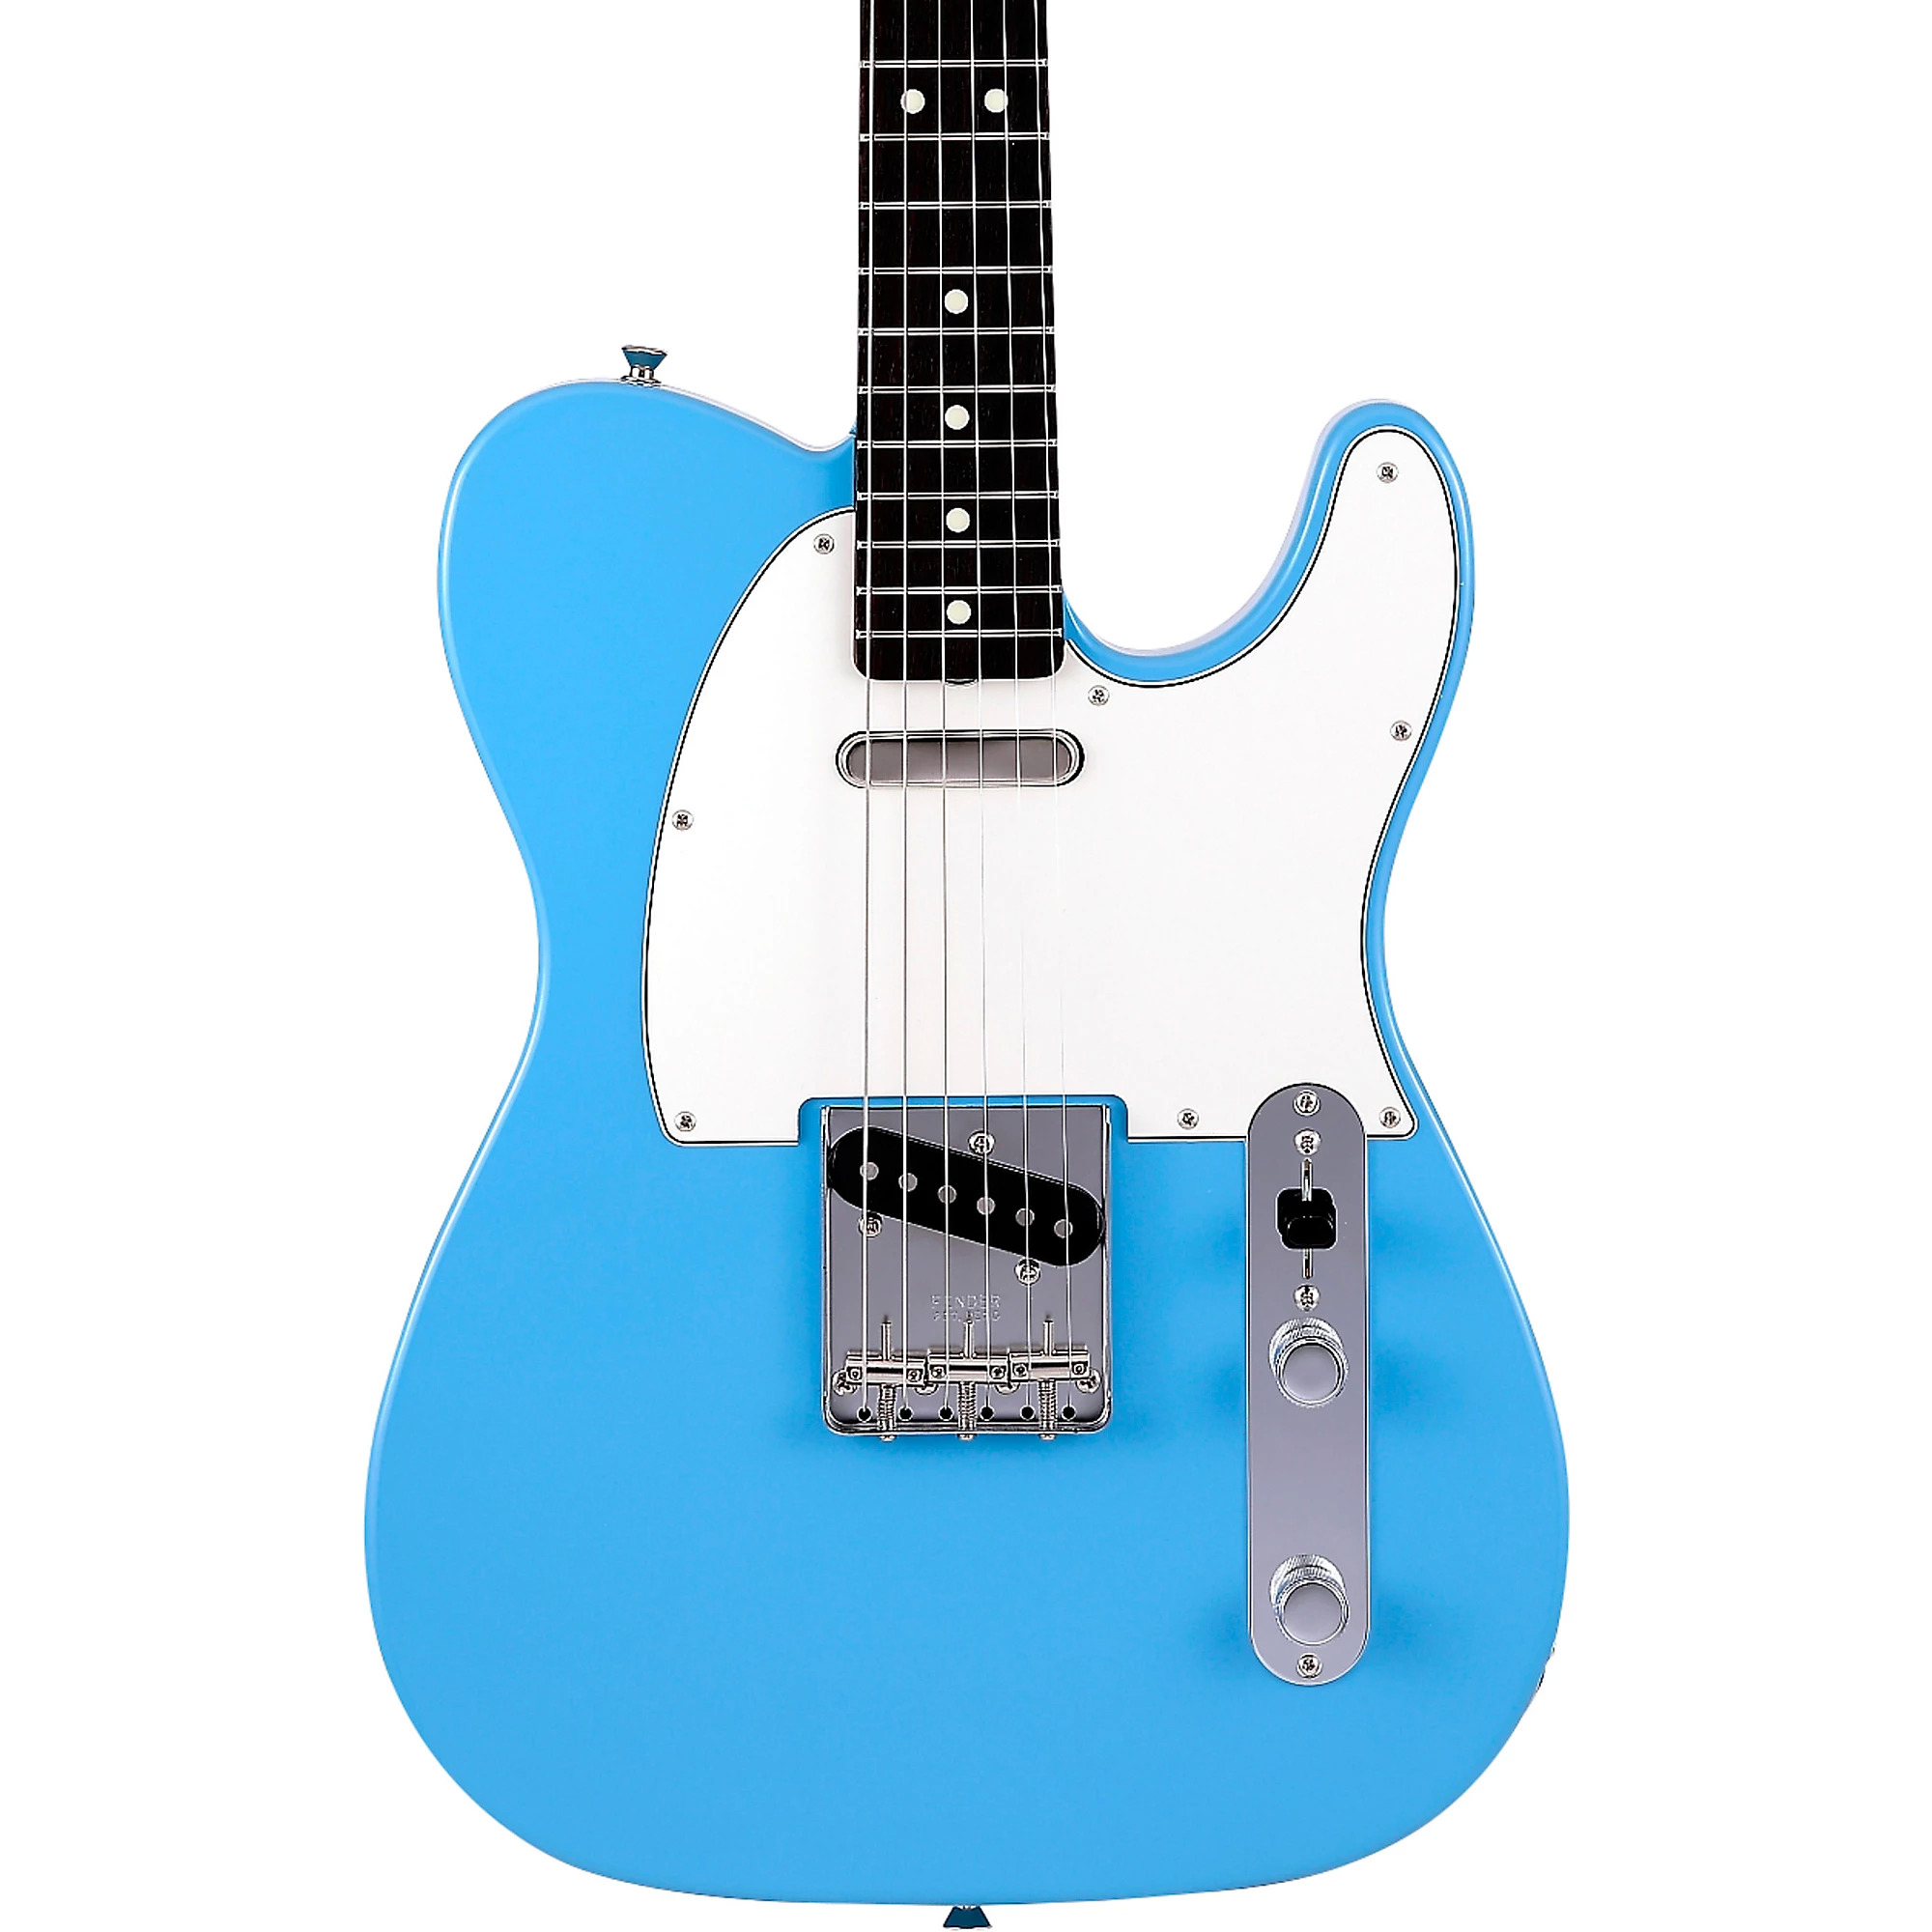 Fender Made in Japan Limited International Color Telecaster Electric Guitar (Maui Blue) $849.99